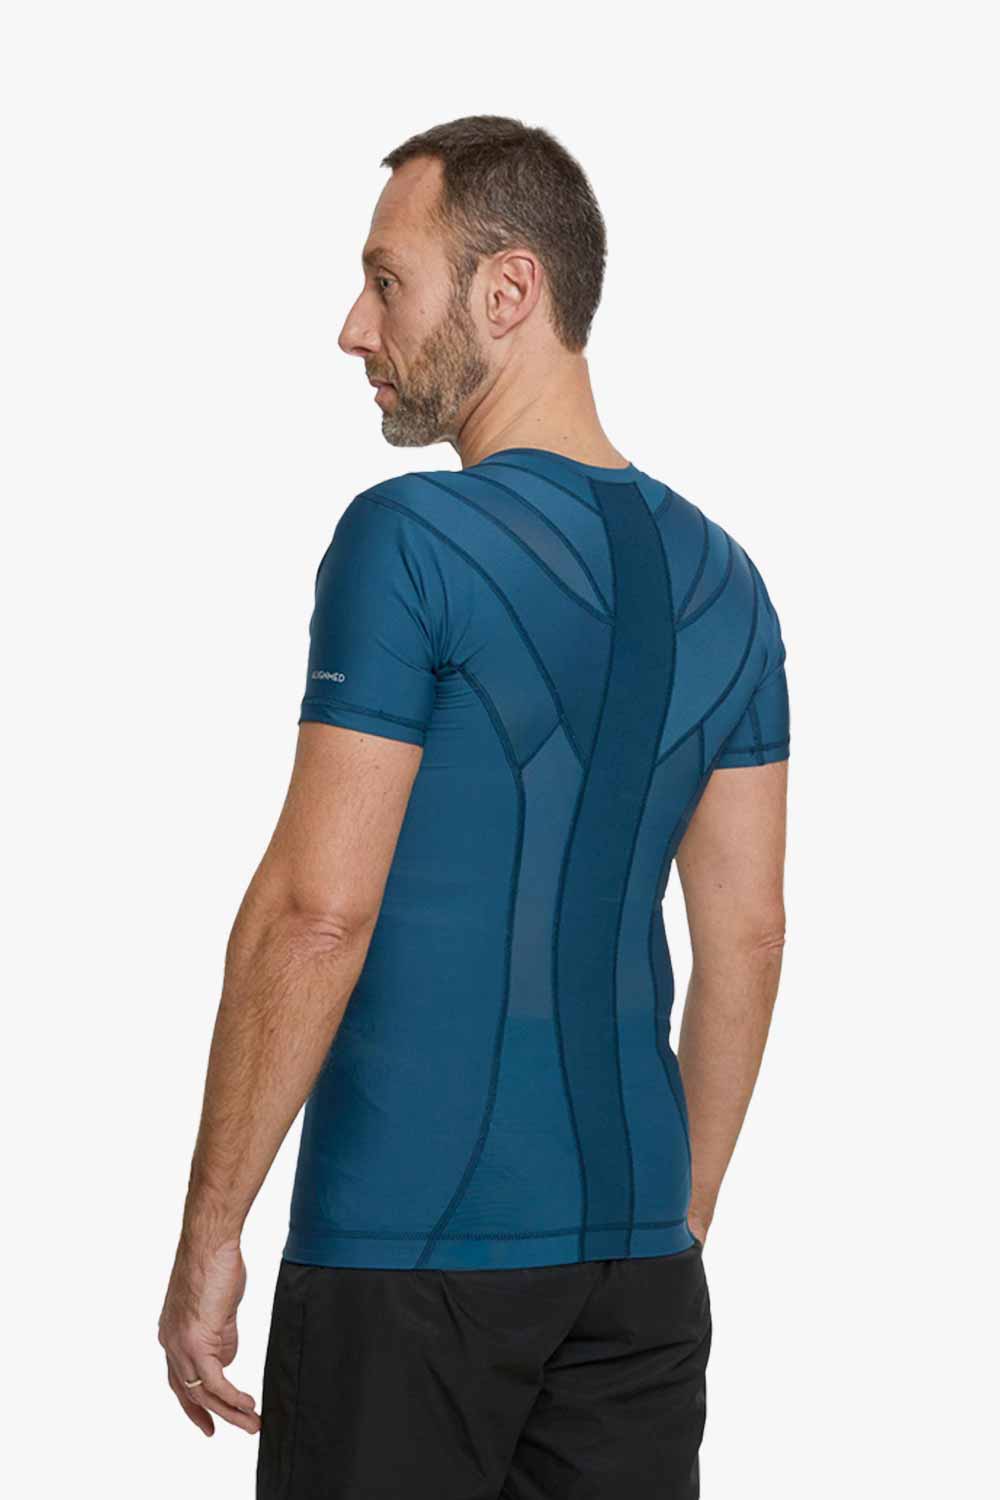 Men's Posture Shirt™ - Sininen